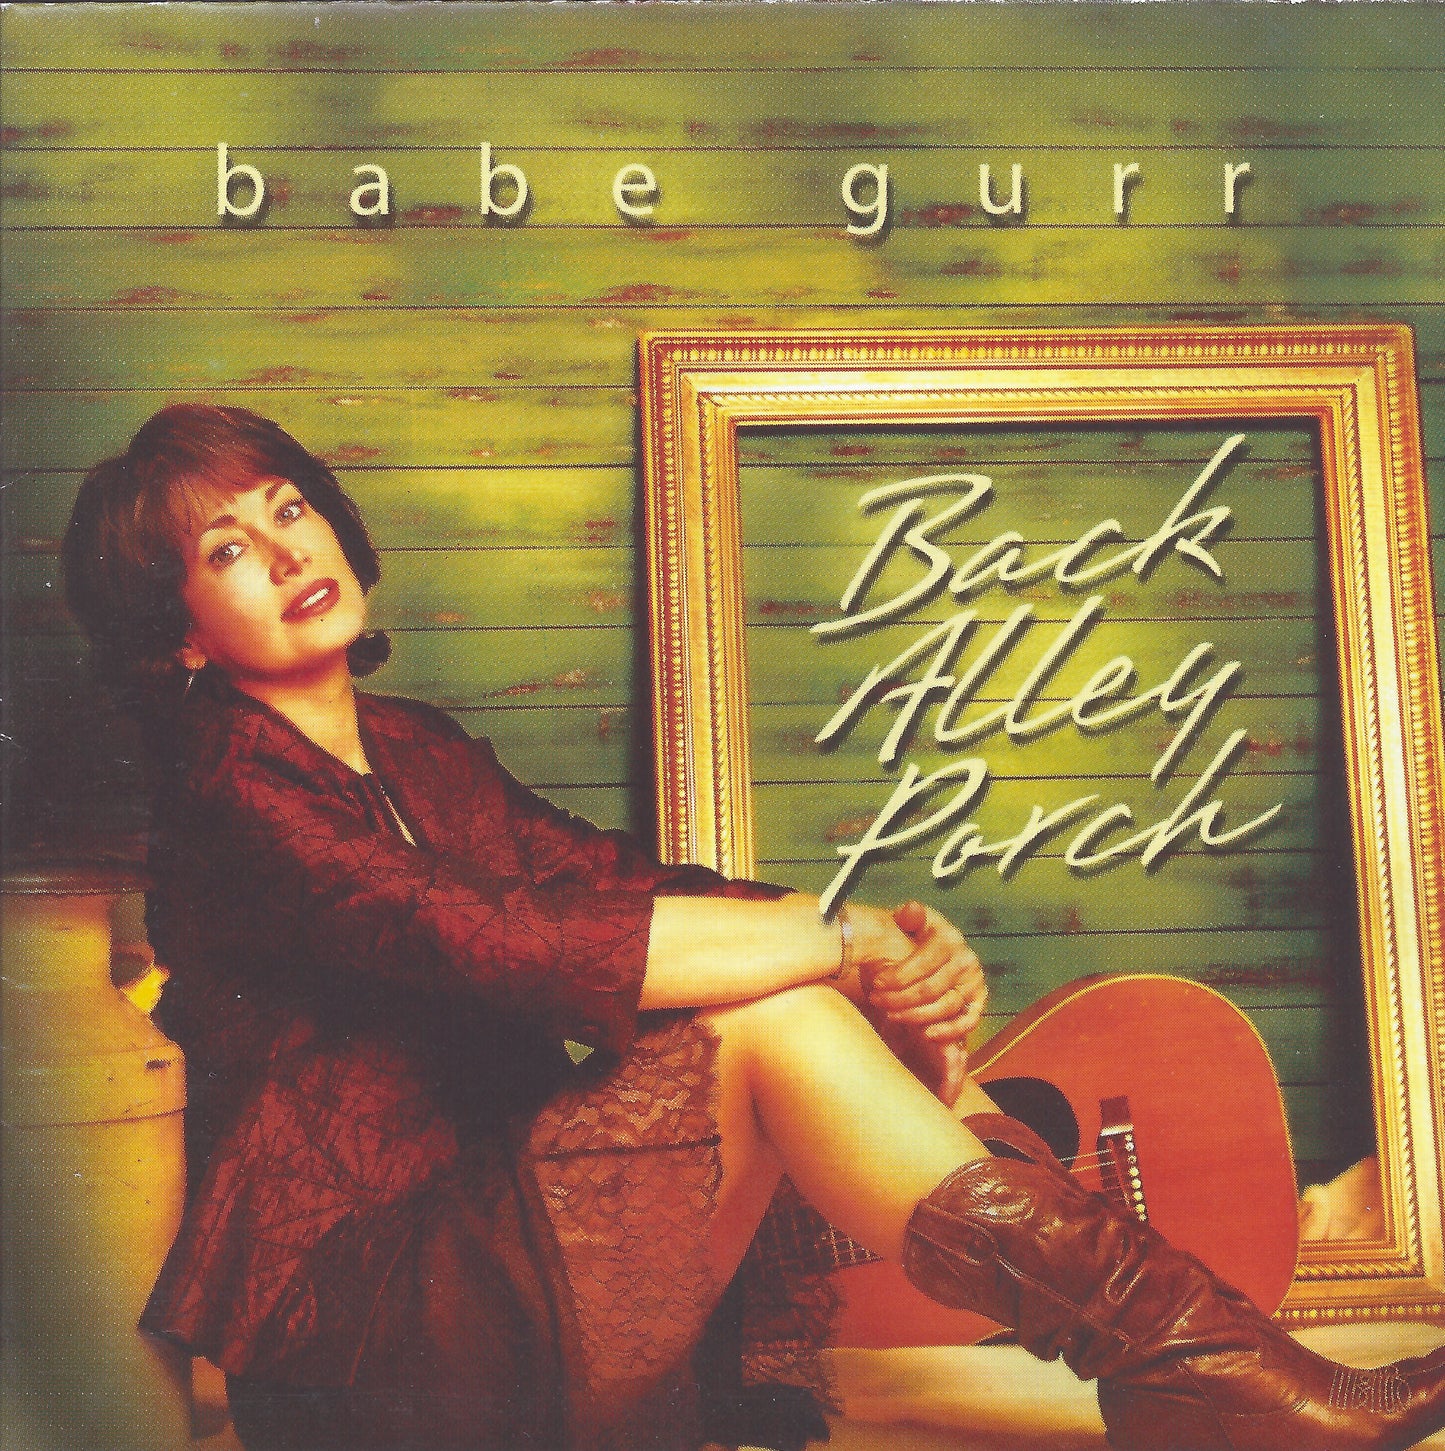 Babe Gurr - Back Alley Porch Album